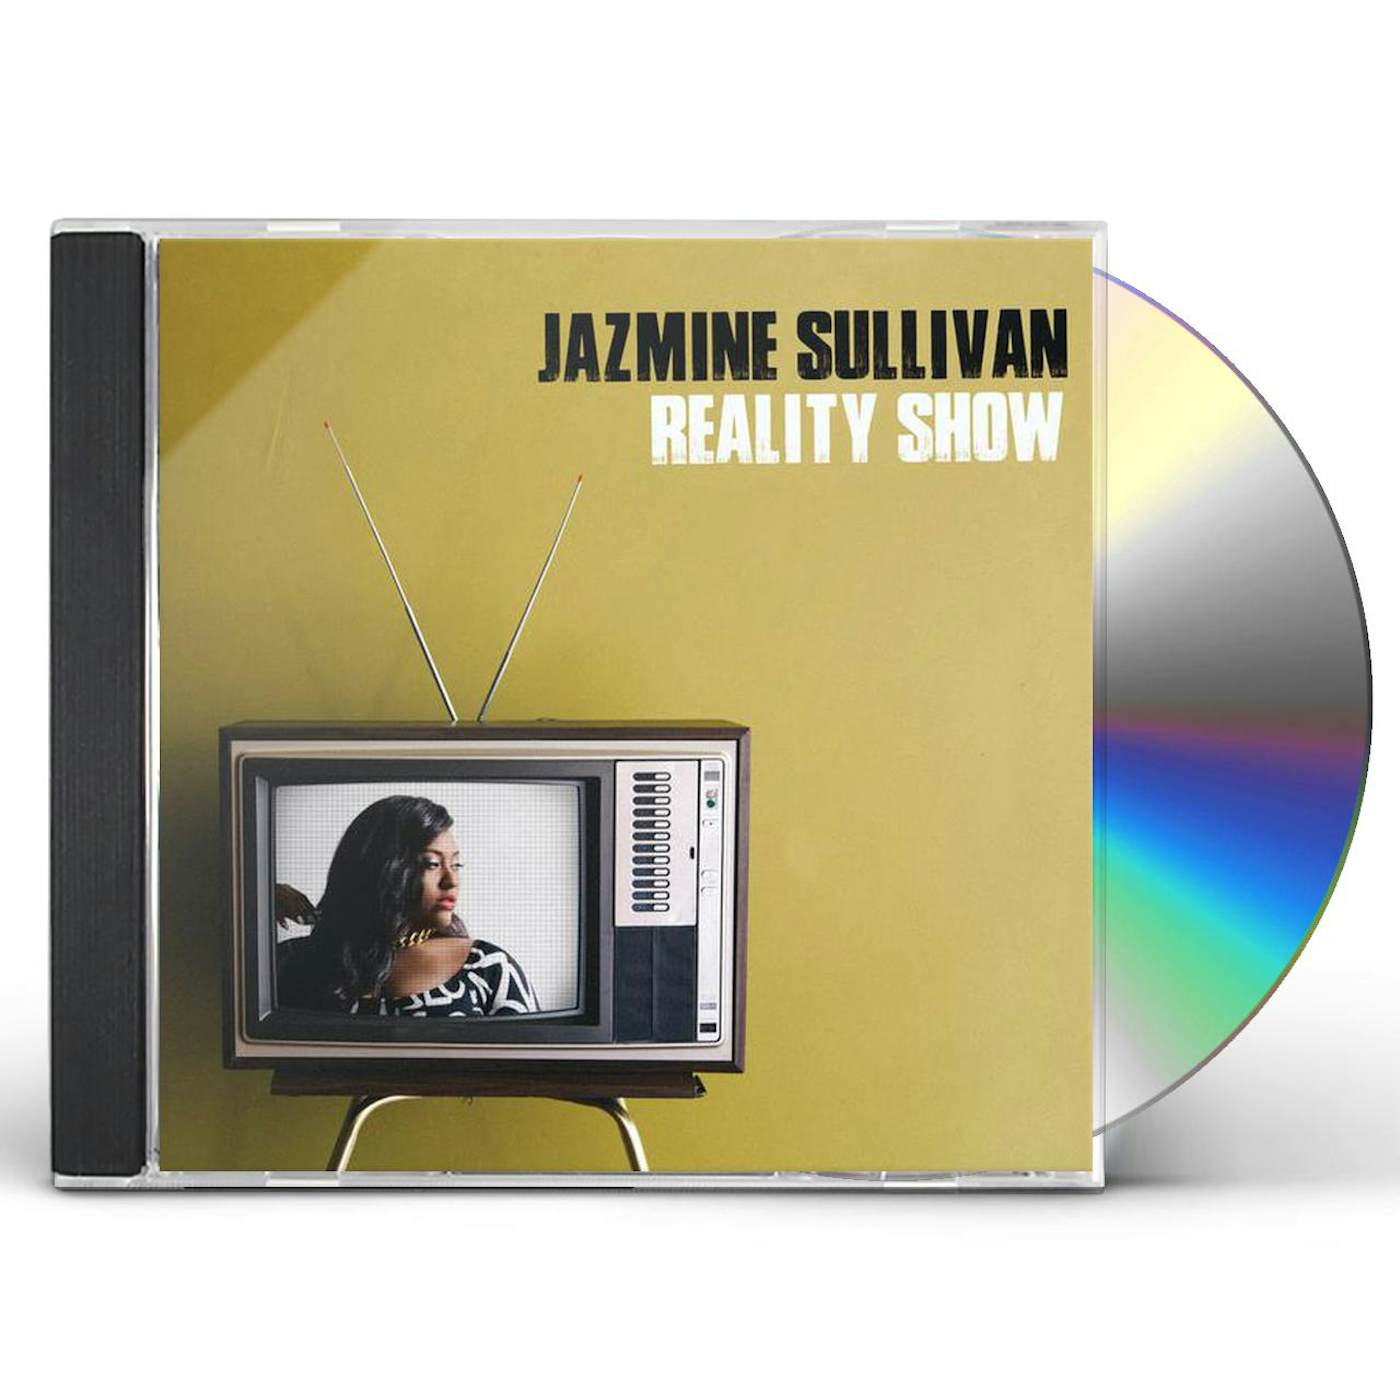 Jazmine Sullivan REALITY SHOW CD